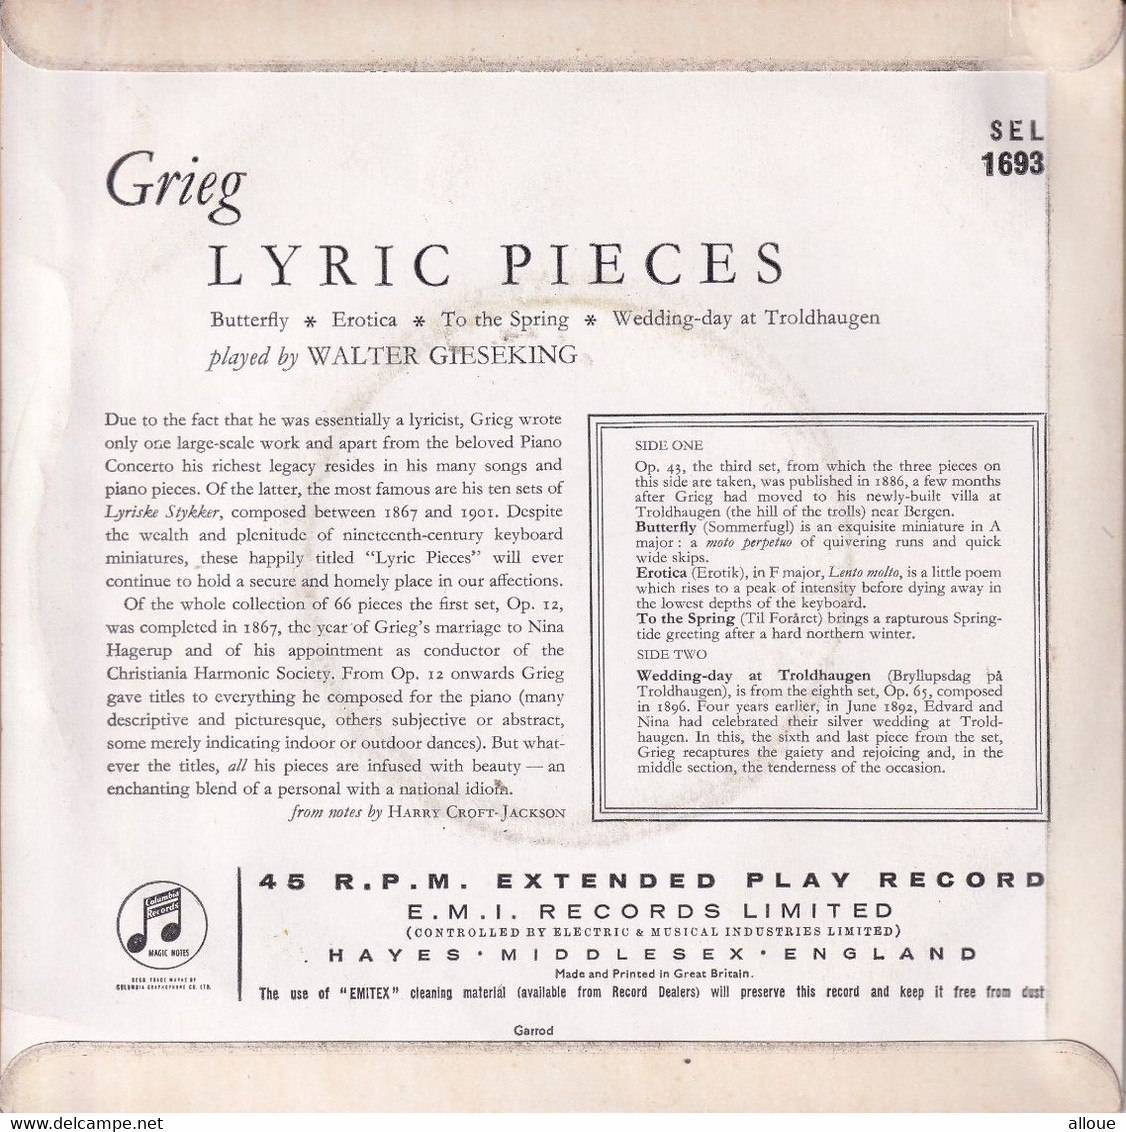 WALTER GIESSEKING -  UK EP - GRIEG - LYRIC PIECES - GIESEKING - BUTTERFLY + 3 - Classical